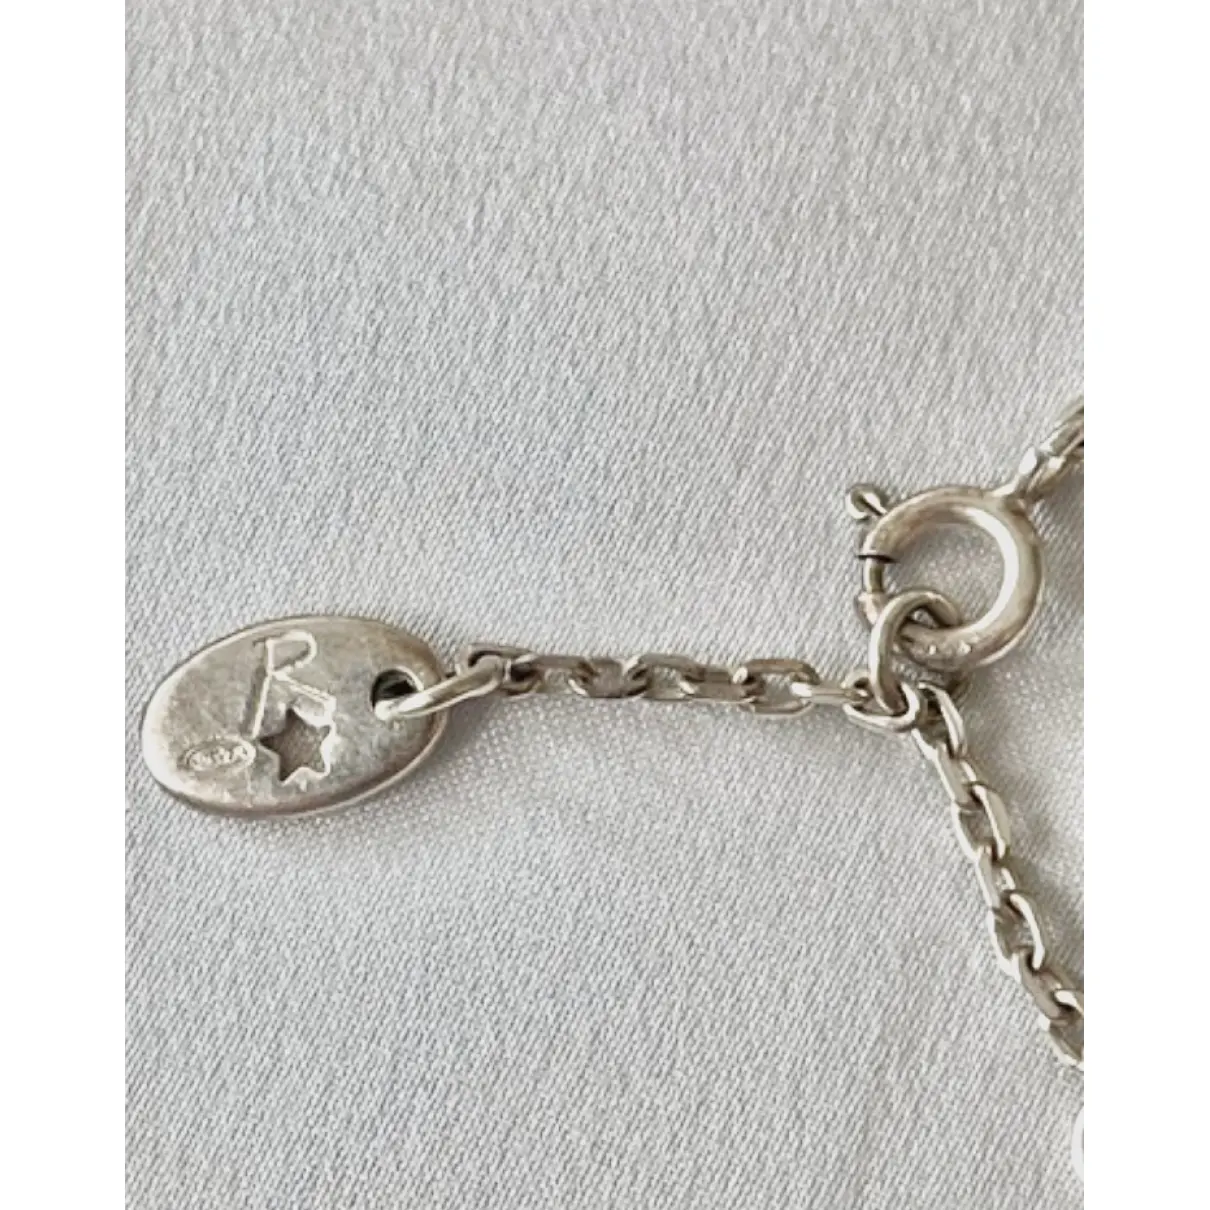 Buy Reminiscence Silver bracelet online